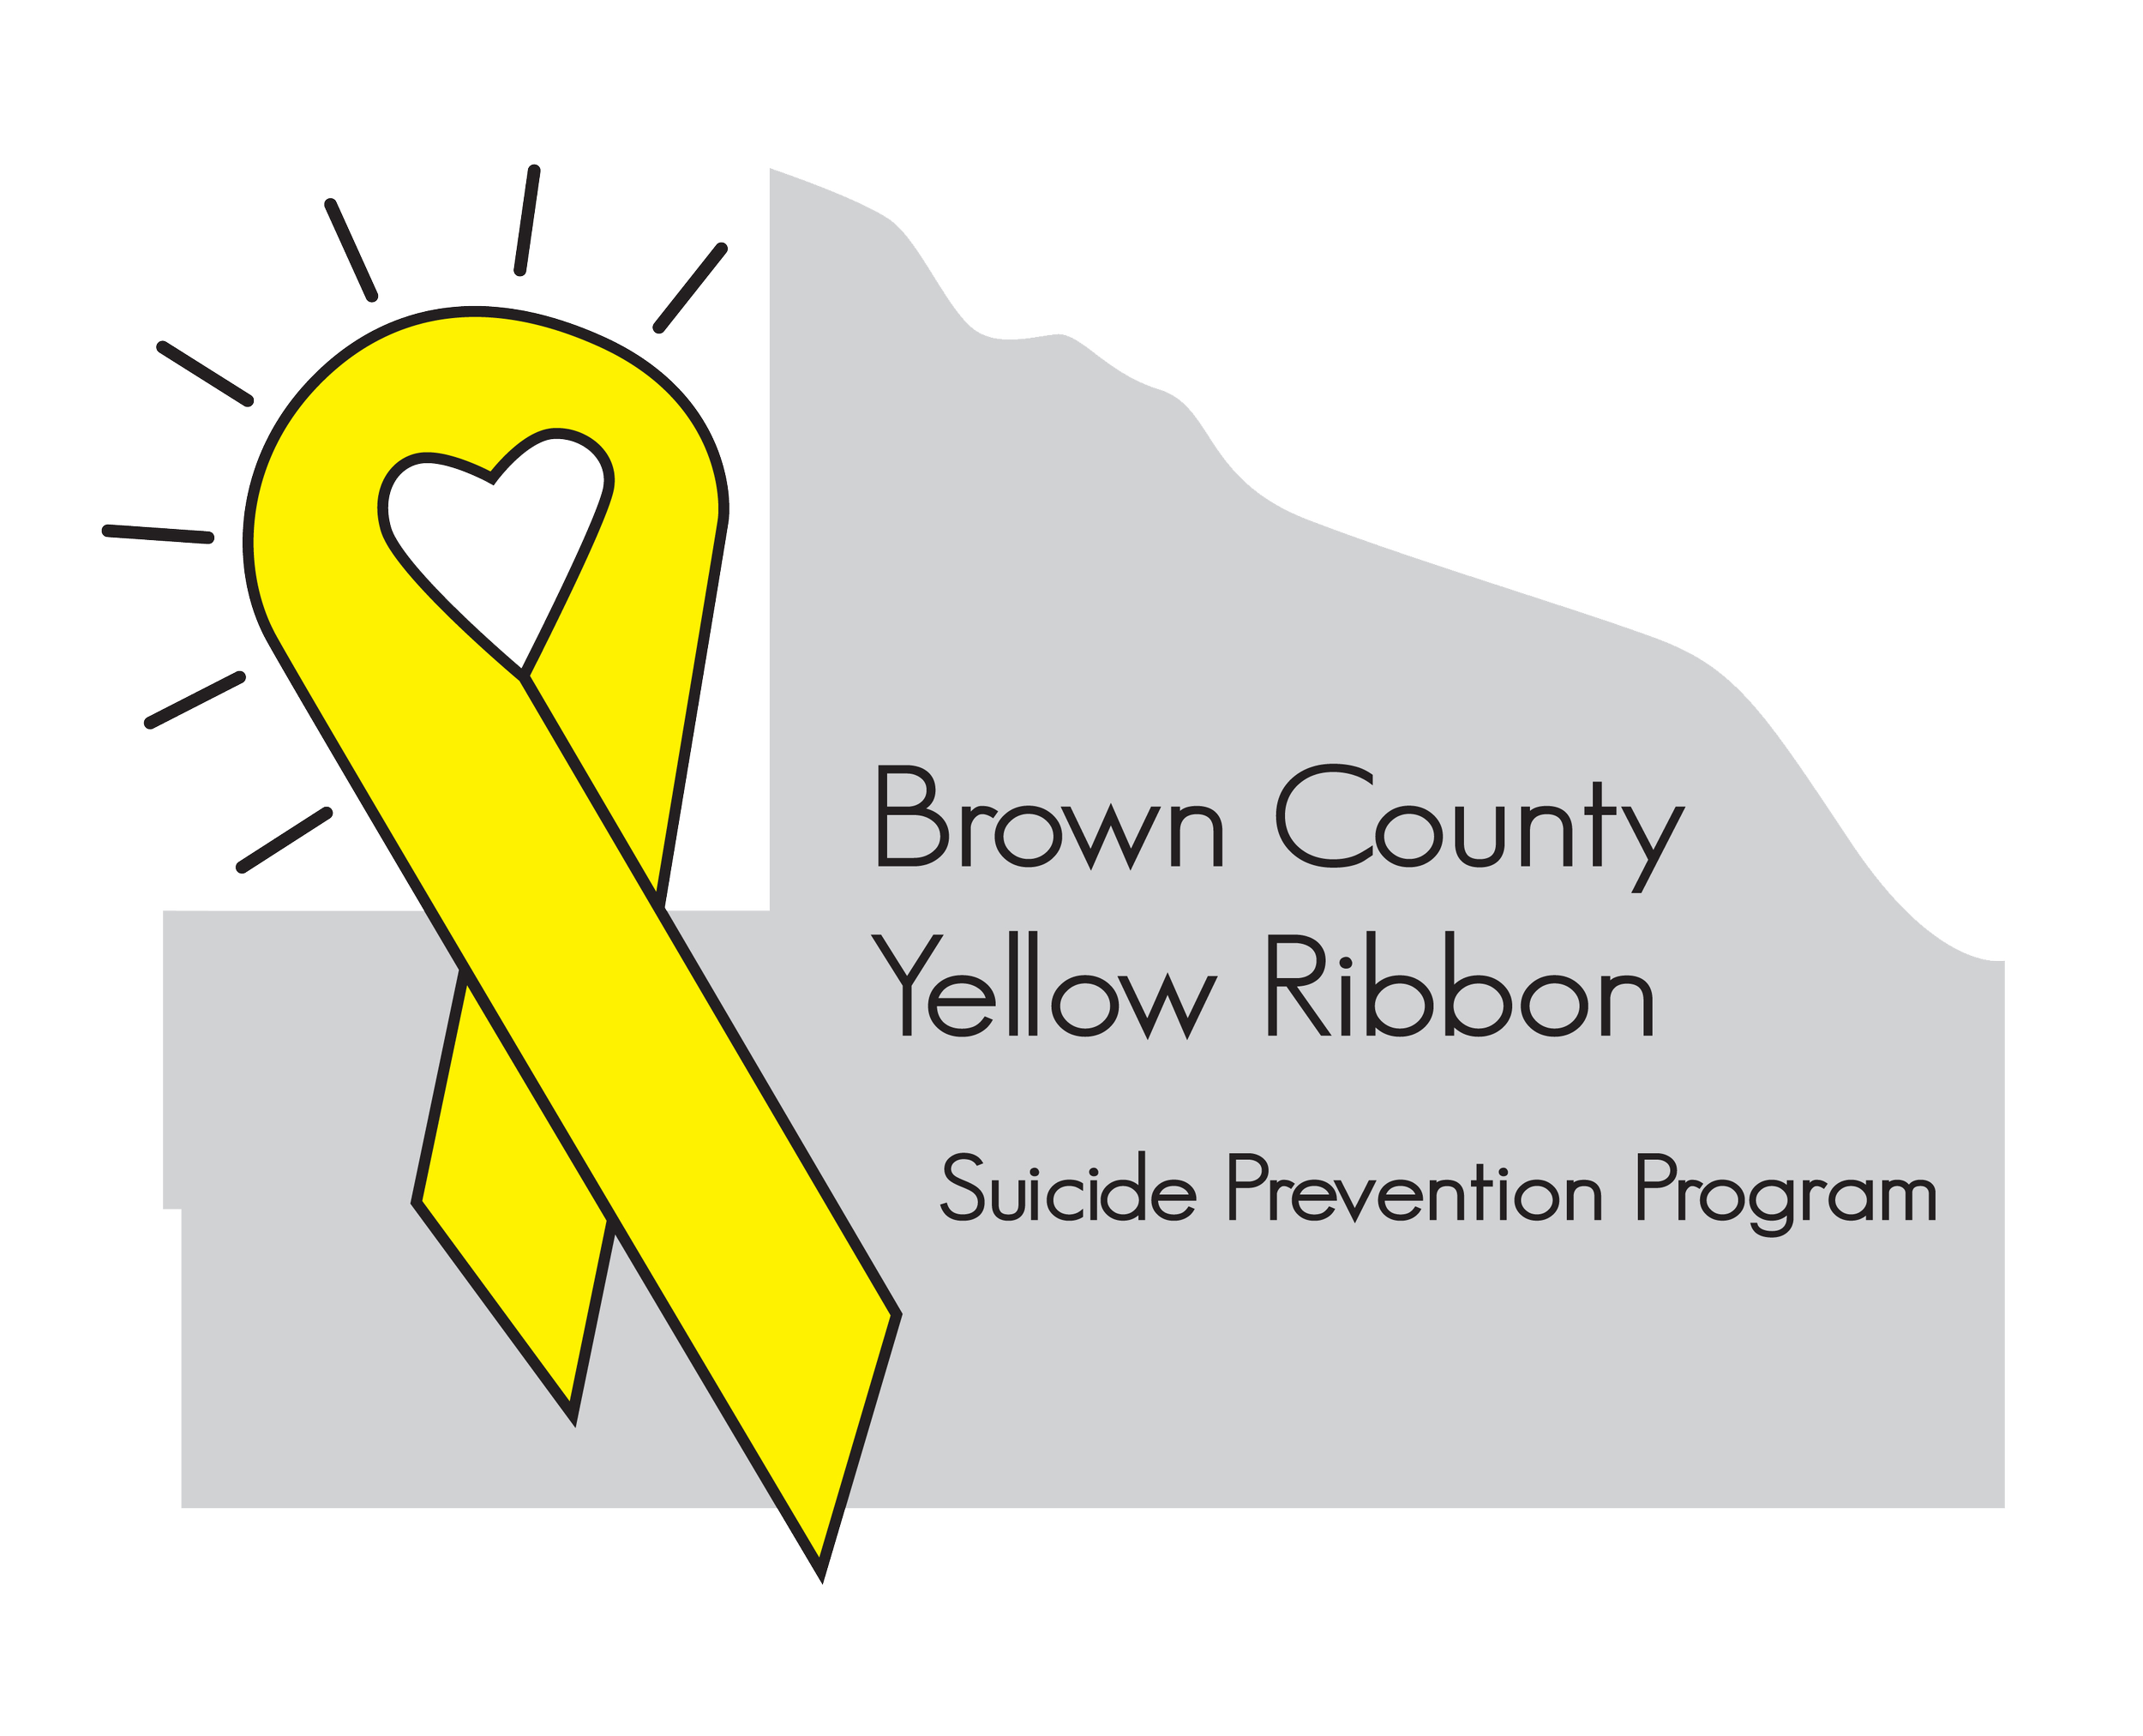 Brown County Yellow Ribbon